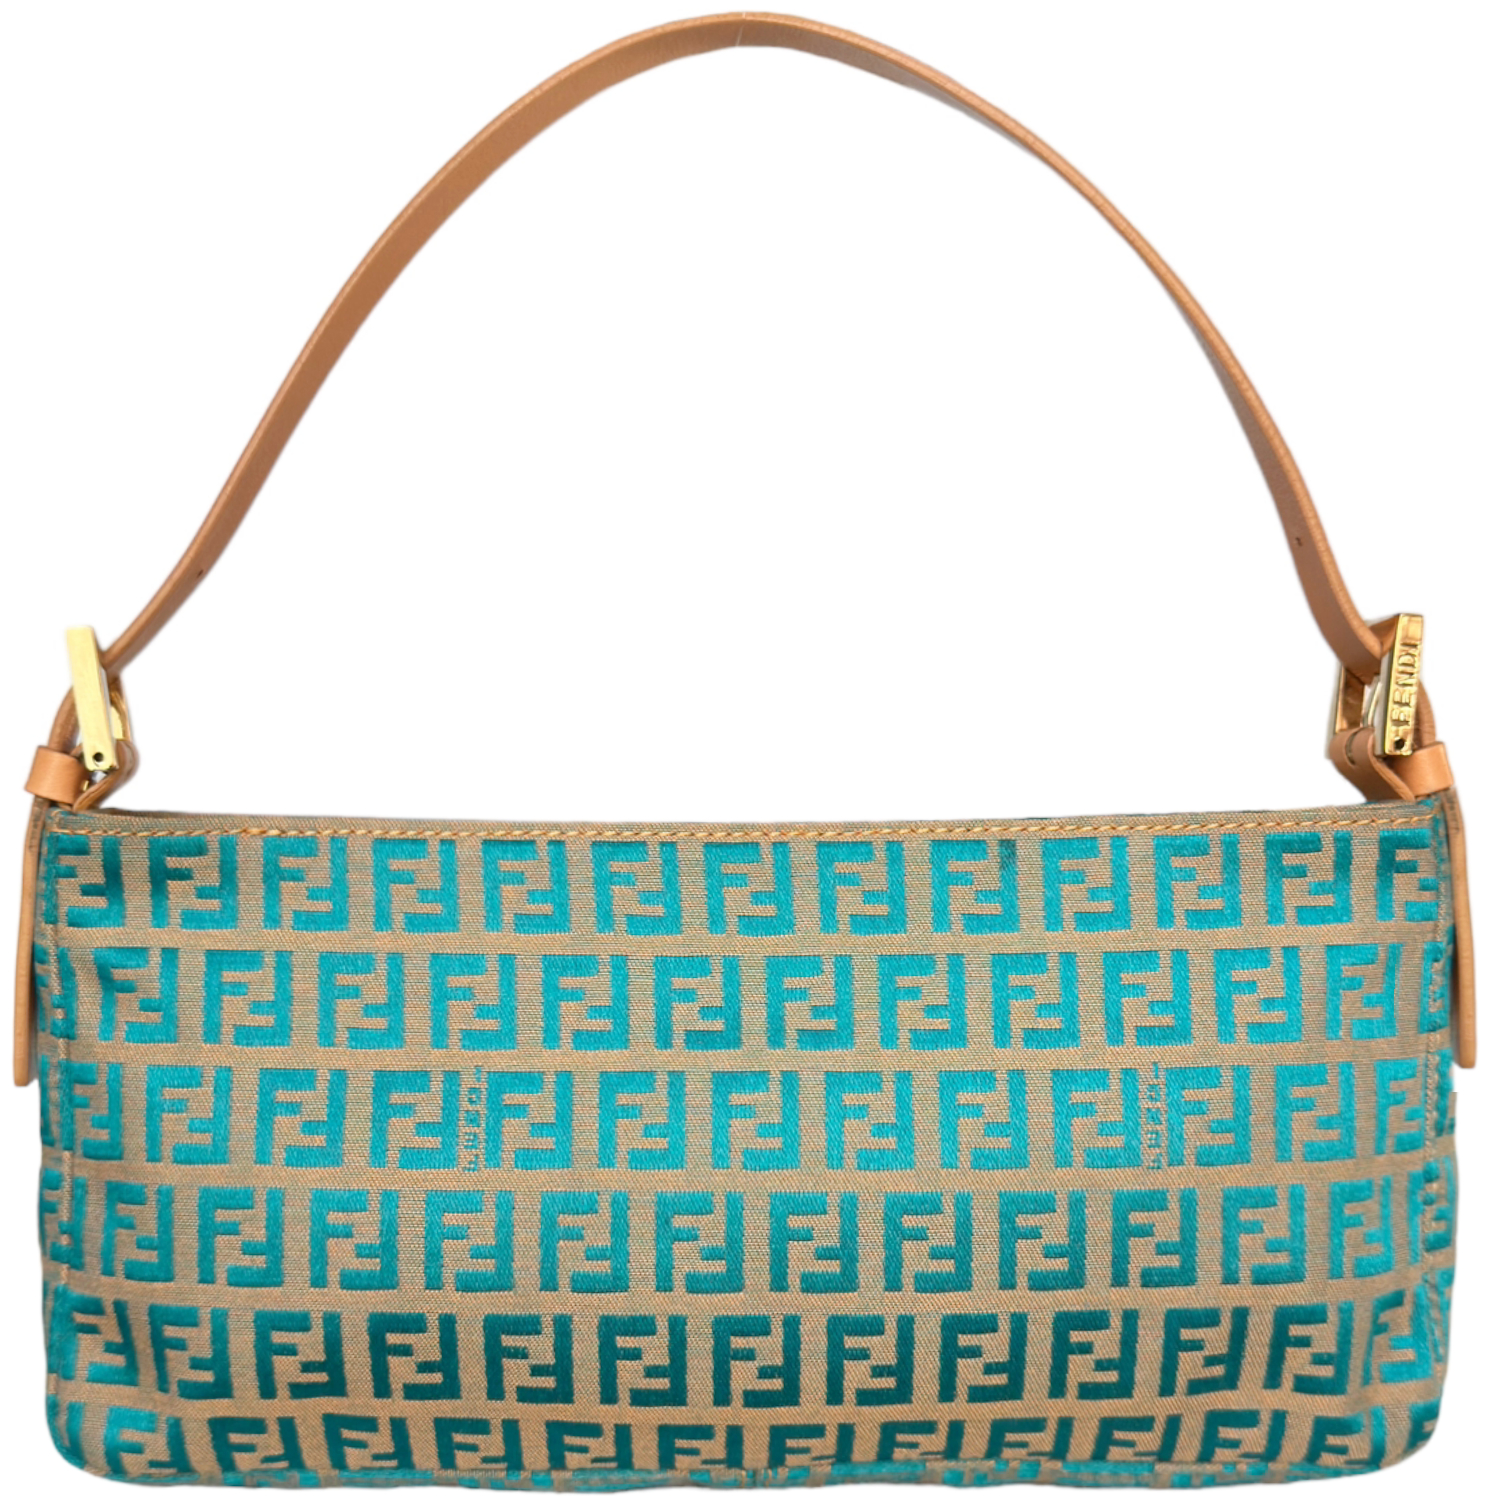 Vintage Fendi Monogram Shoulder Bag in Aqua Blue / Green / Tan | NITRYL